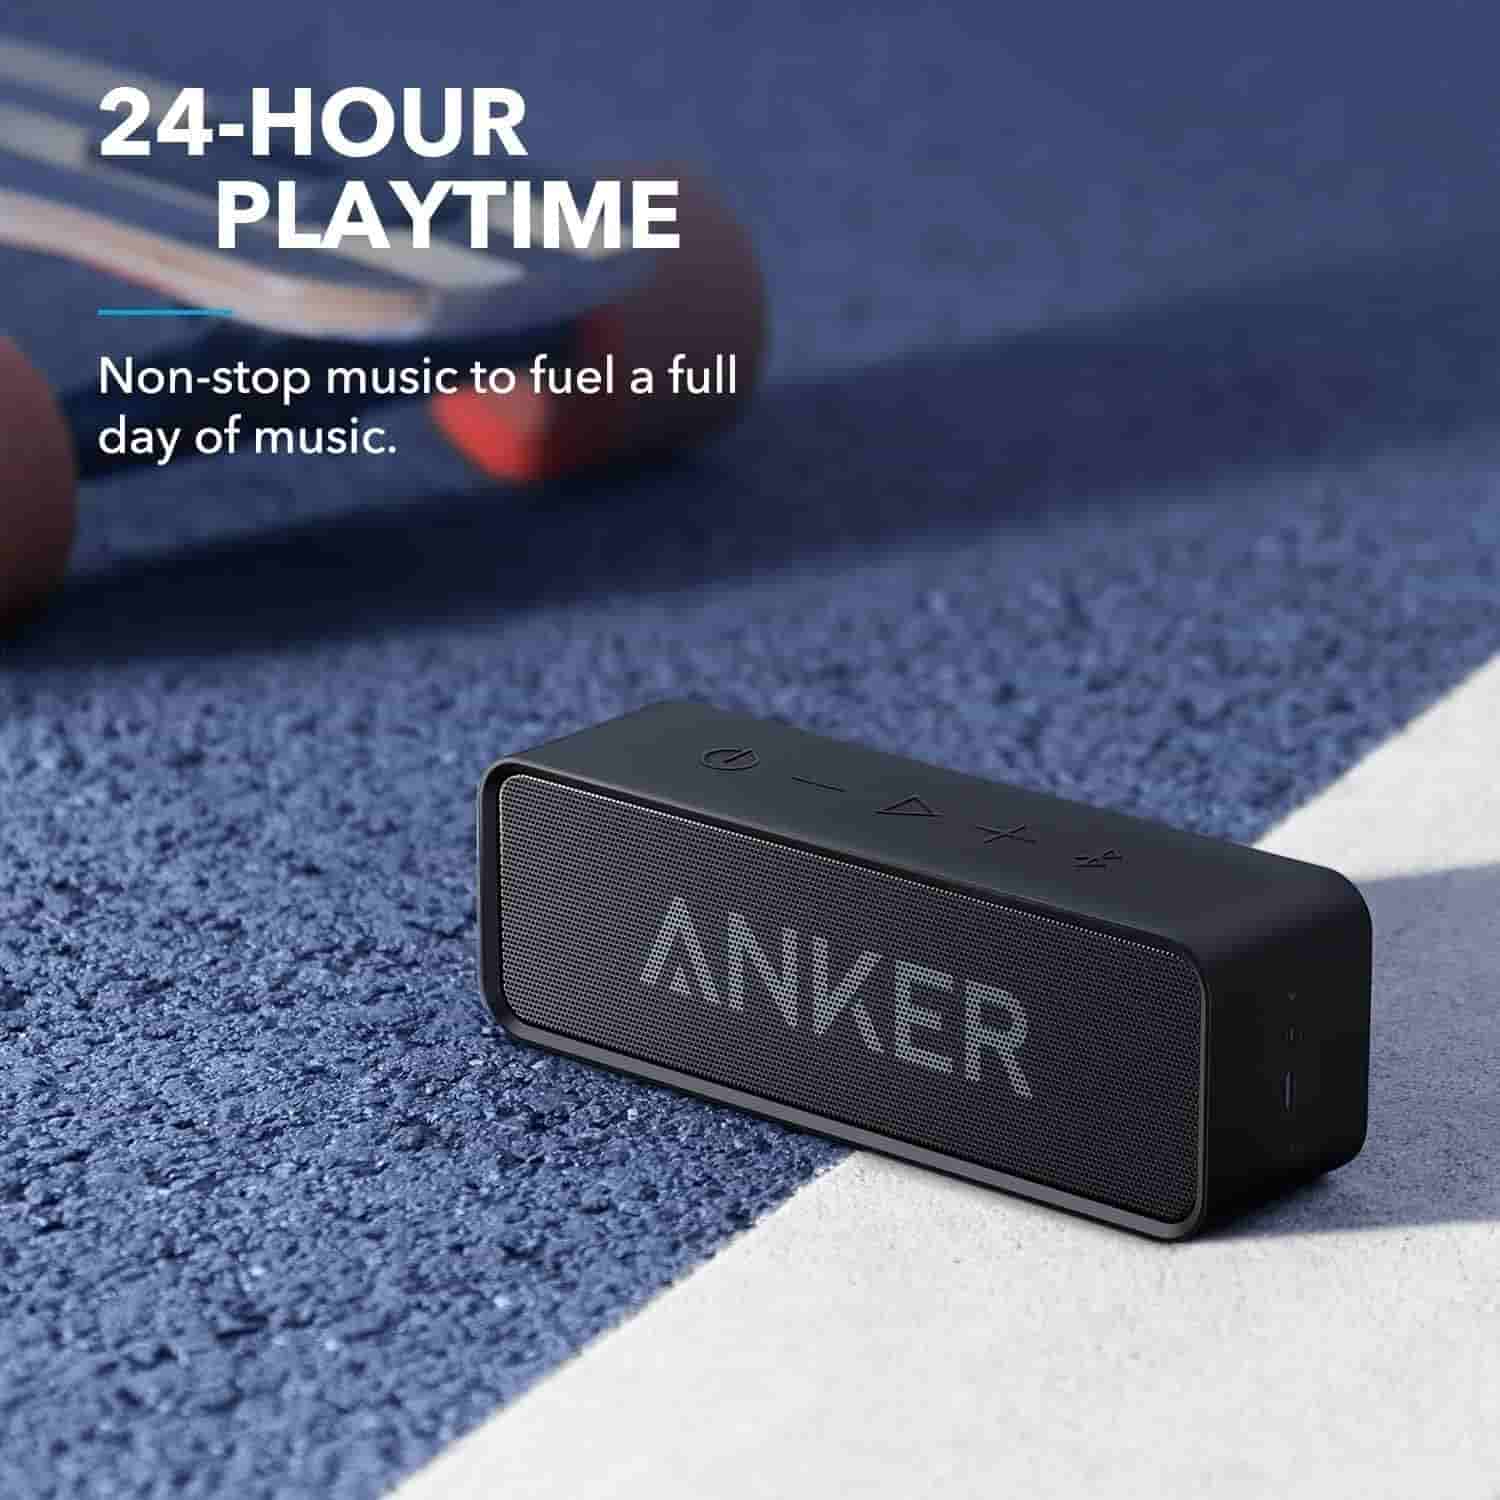 Anker Soundcore Bluetooth Speaker amazon